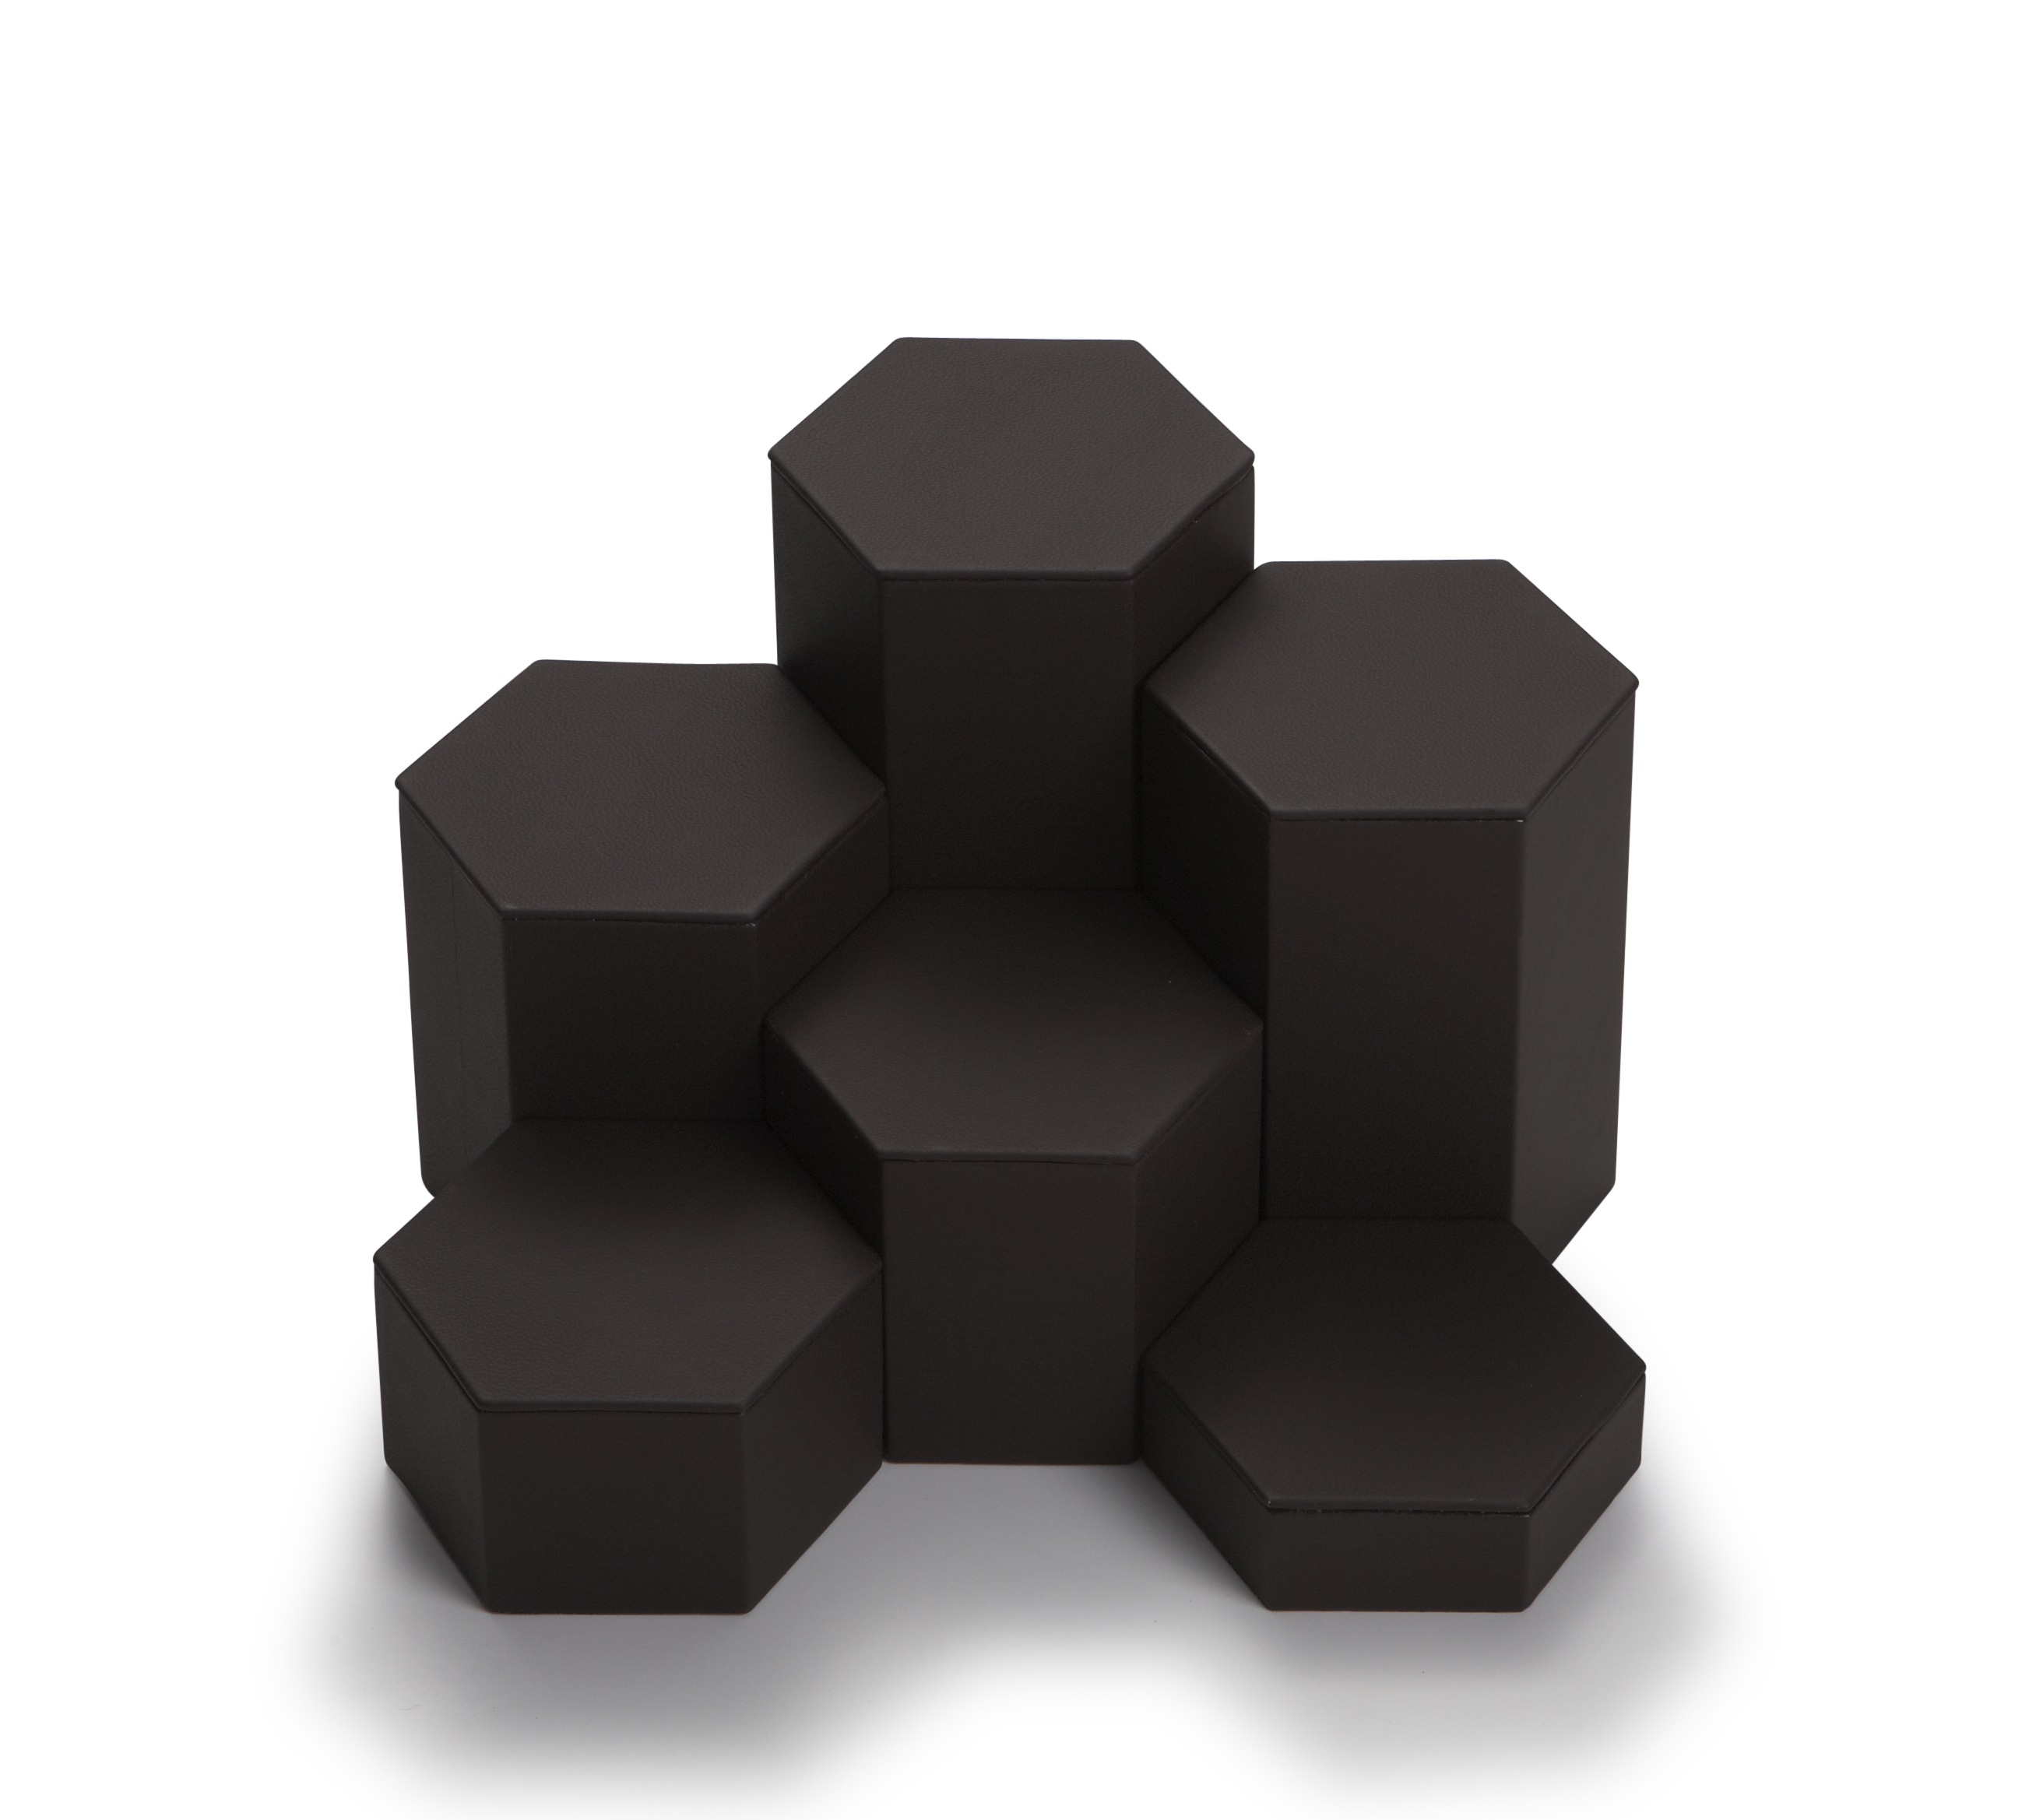 Chocolate Leatherette 6 Pc Hexagonal Risers